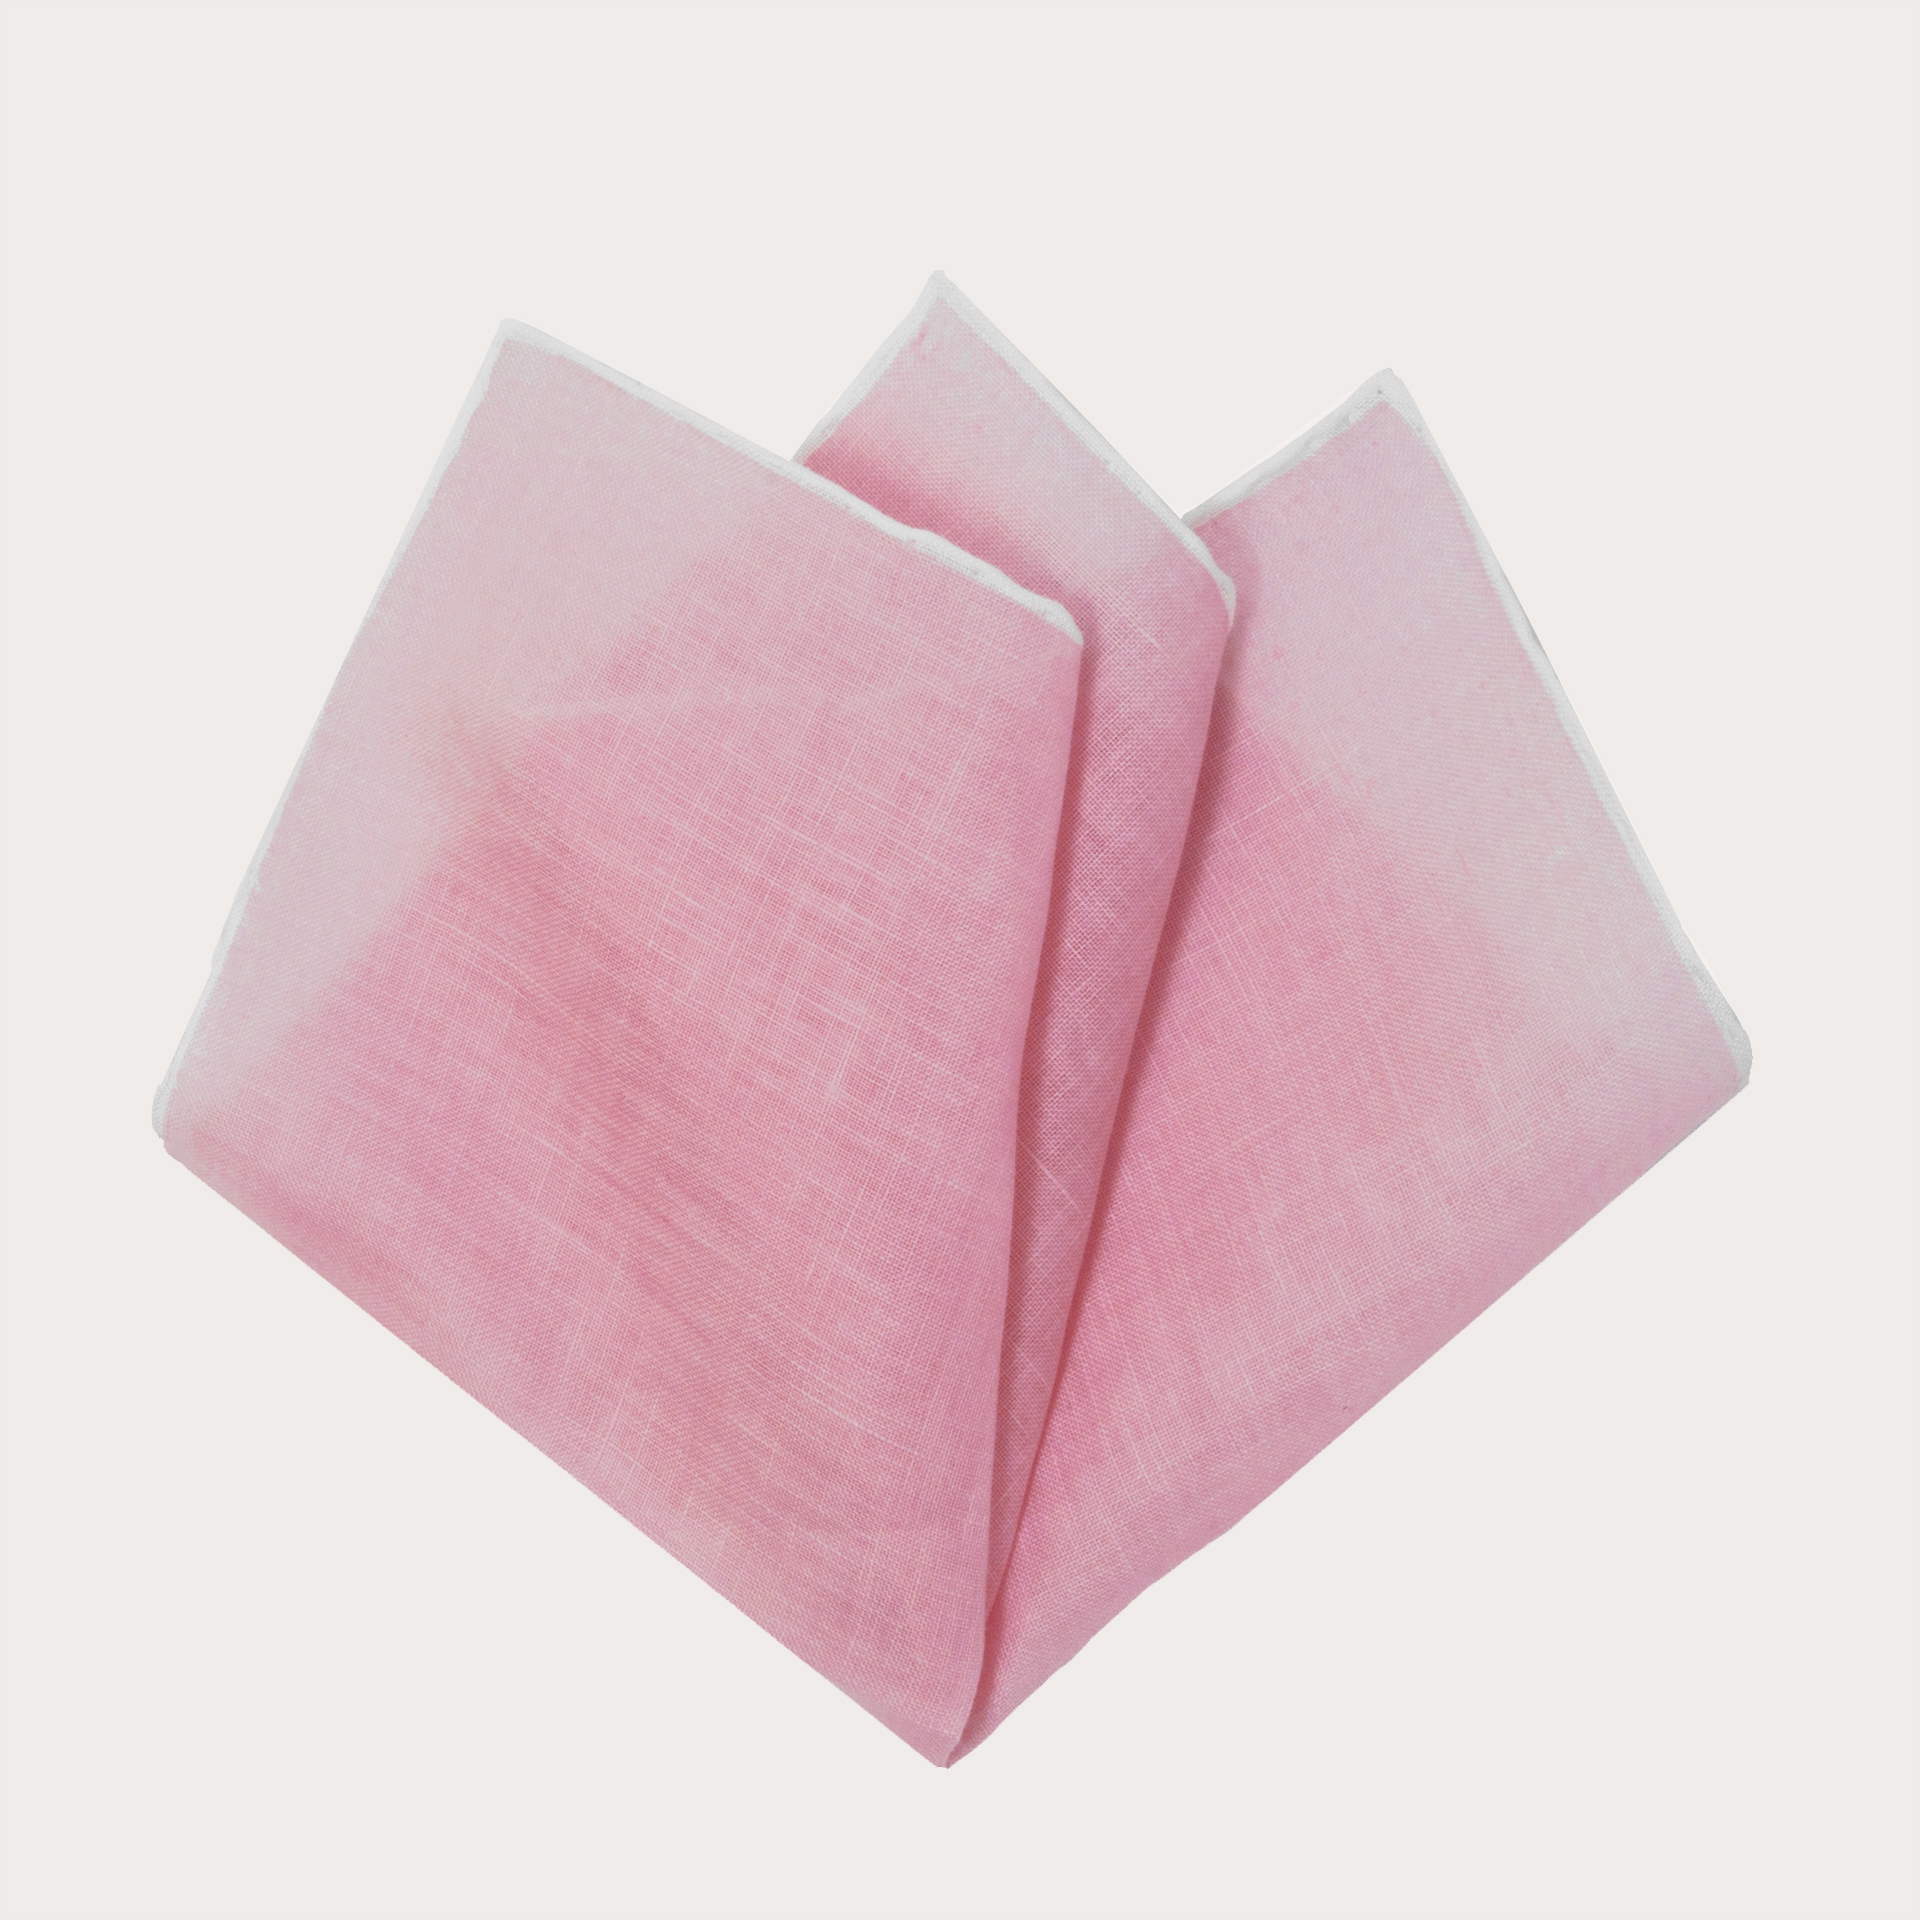 BRUCLE Pañuelo de bolsillo en lino, rosa con bordes blancos